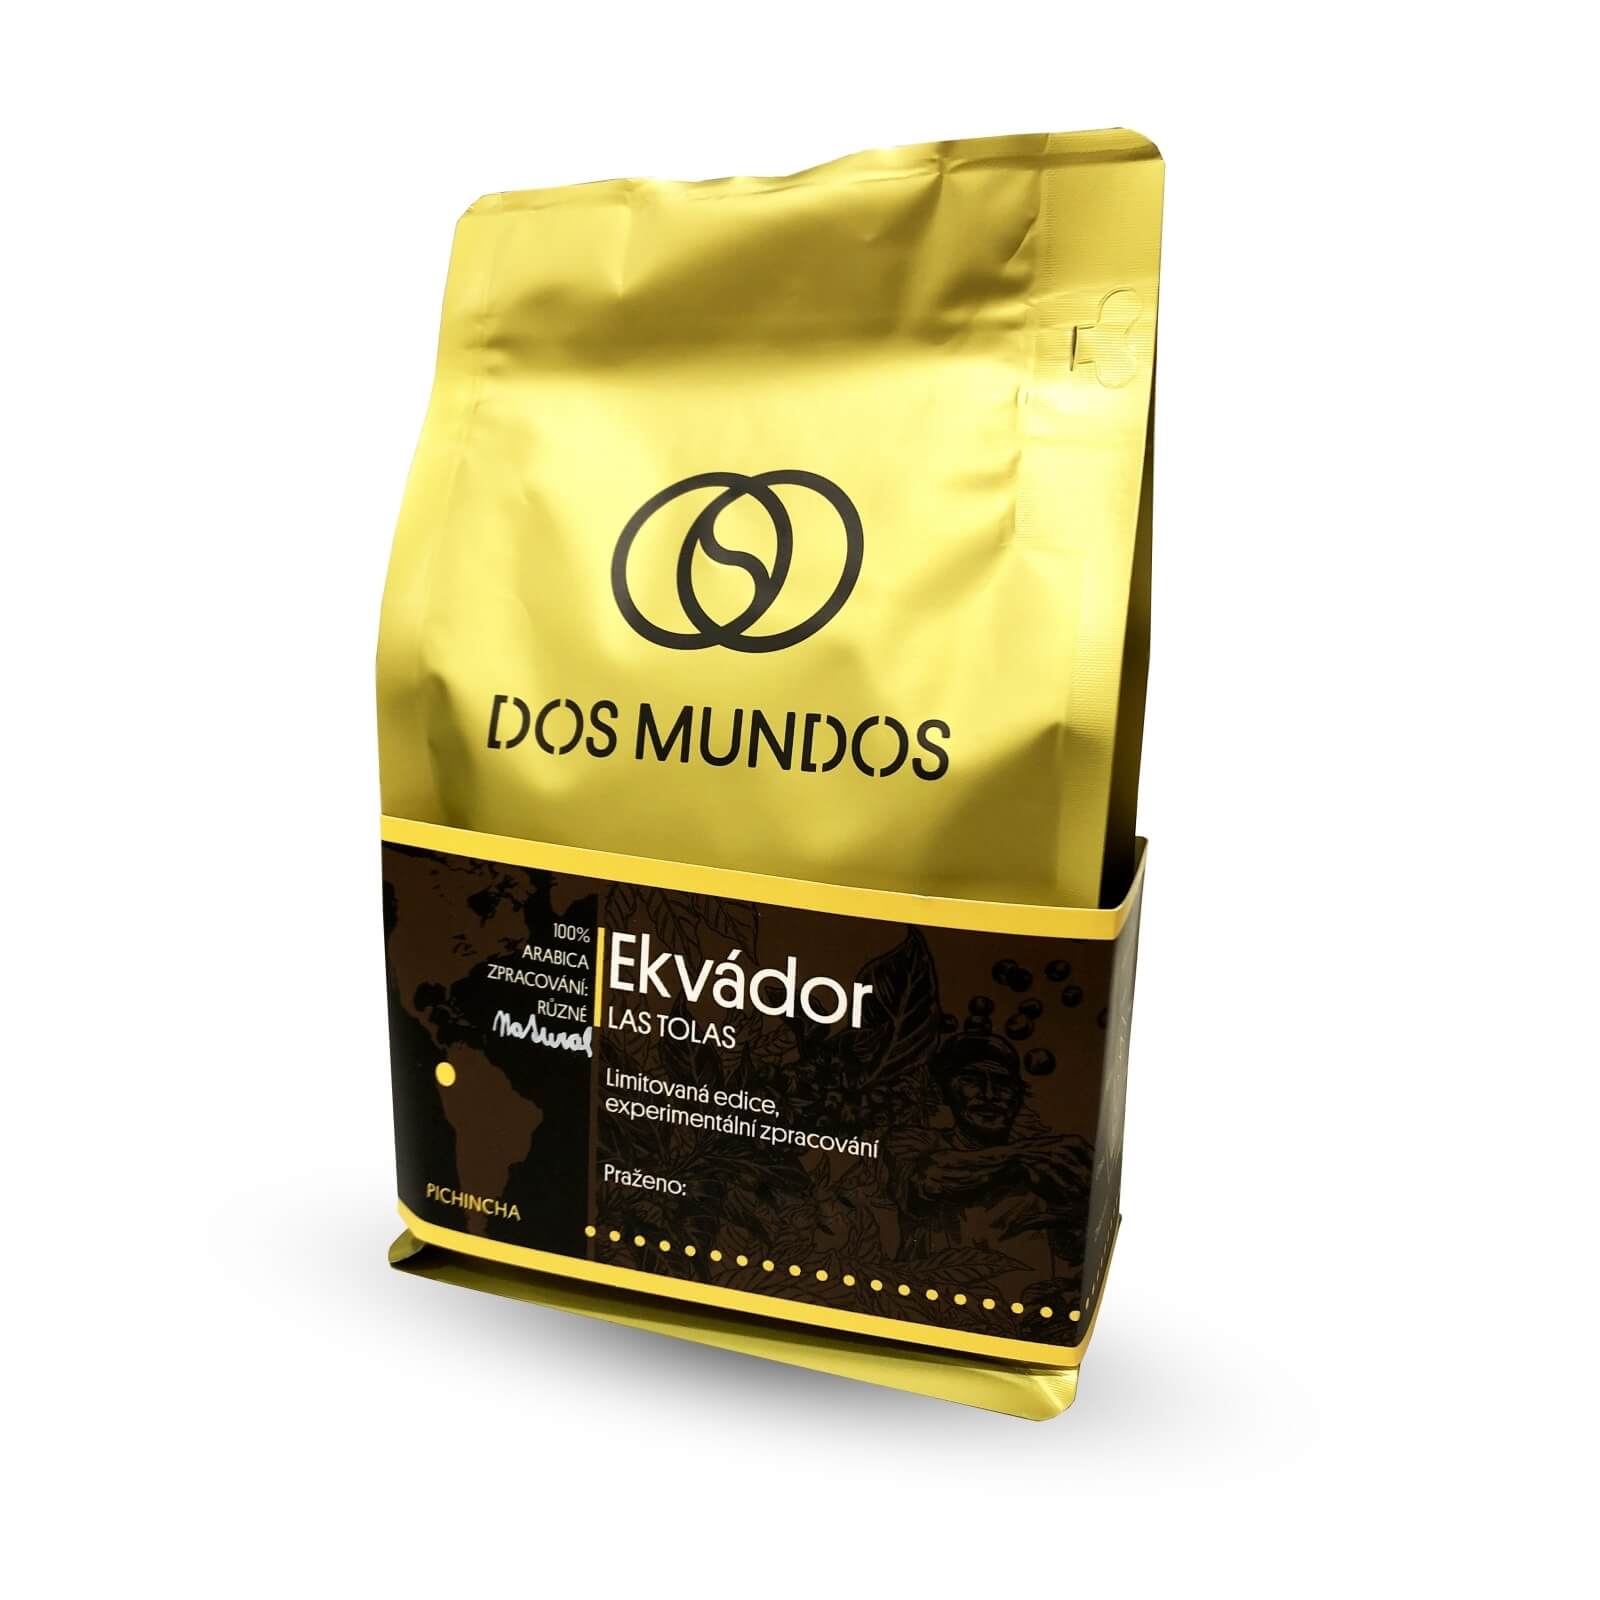 Specialty coffee Dos Mundos Ekvádor LAS TOLAS - experimentální lot